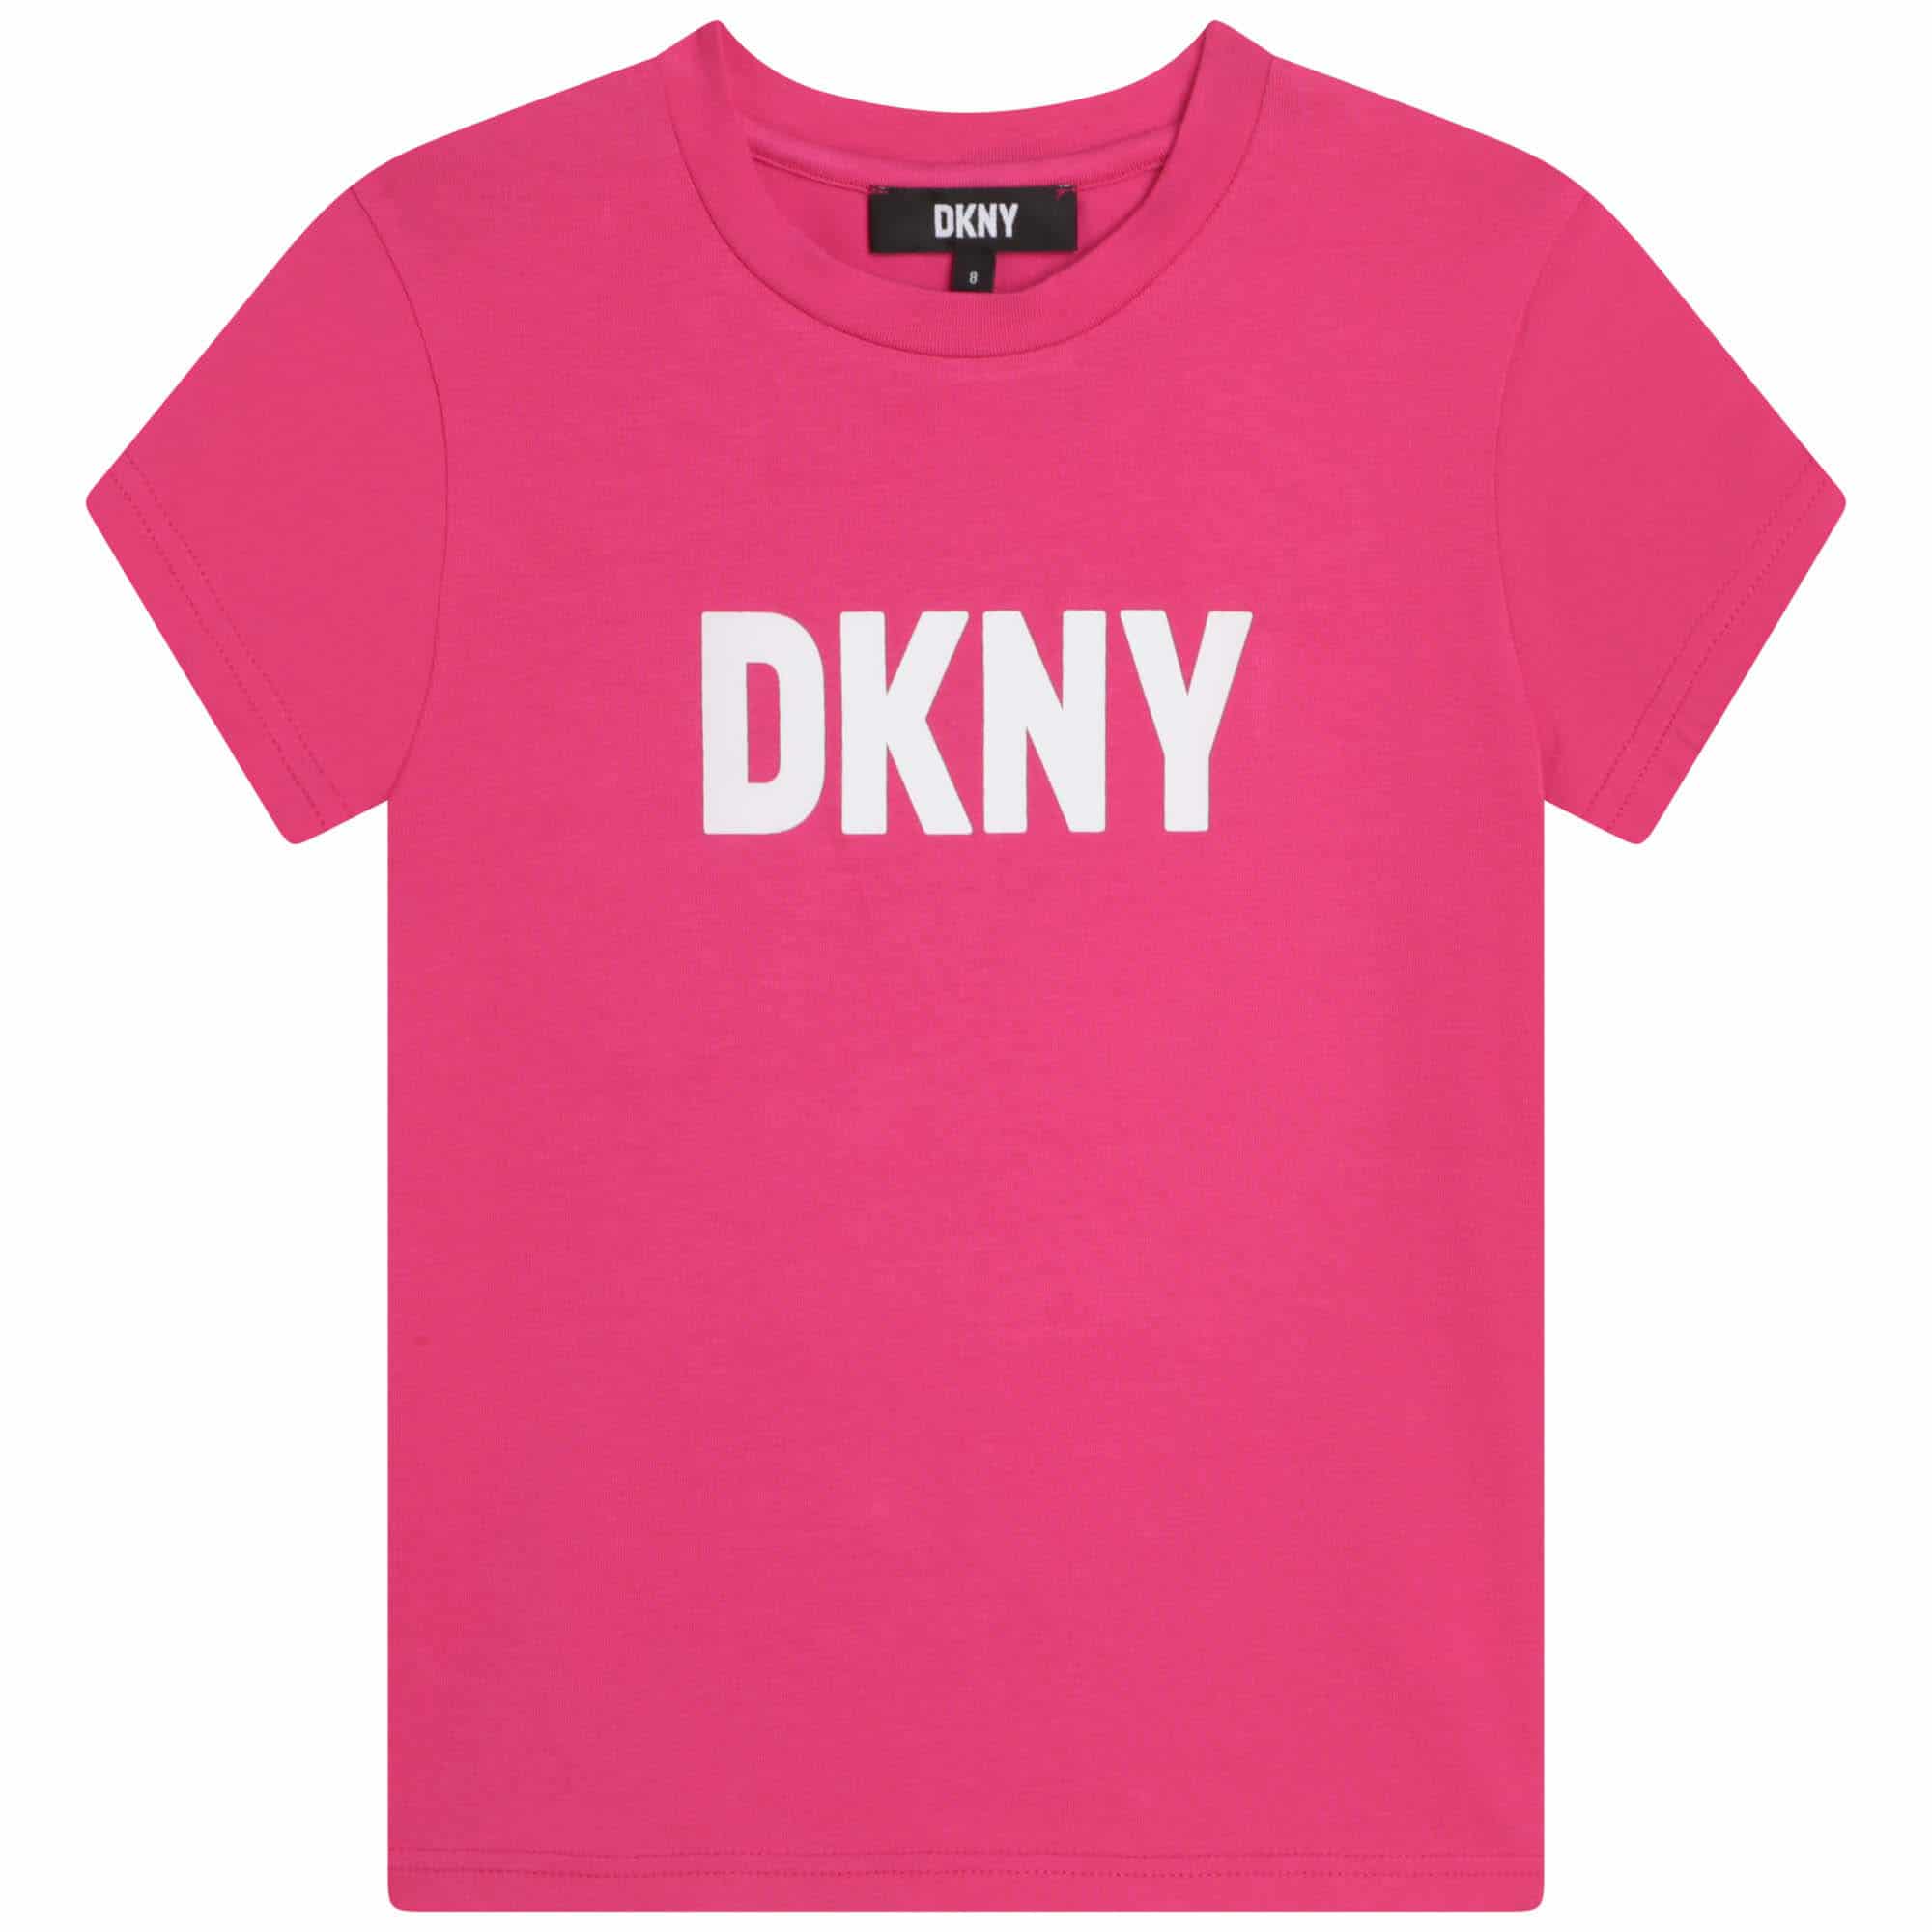 DKNY girls pink tshirt